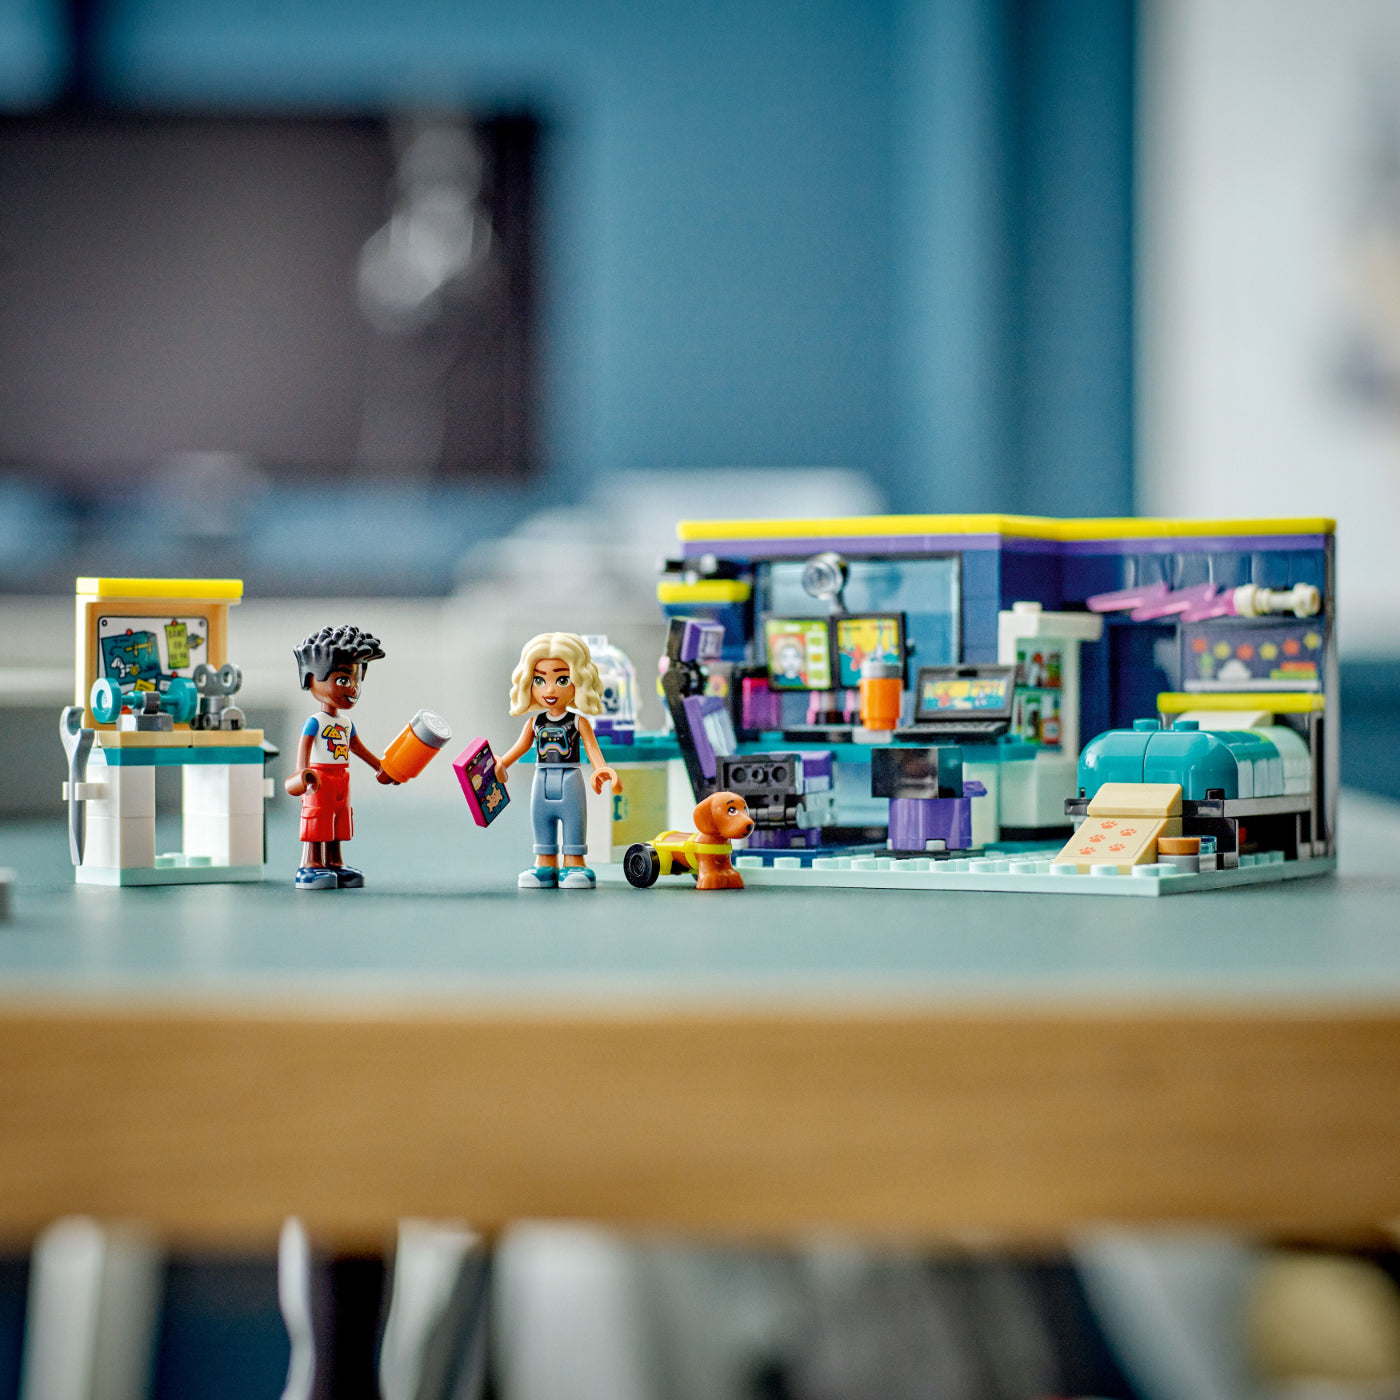 LEGO® Friends Habitación De Nova (41755)